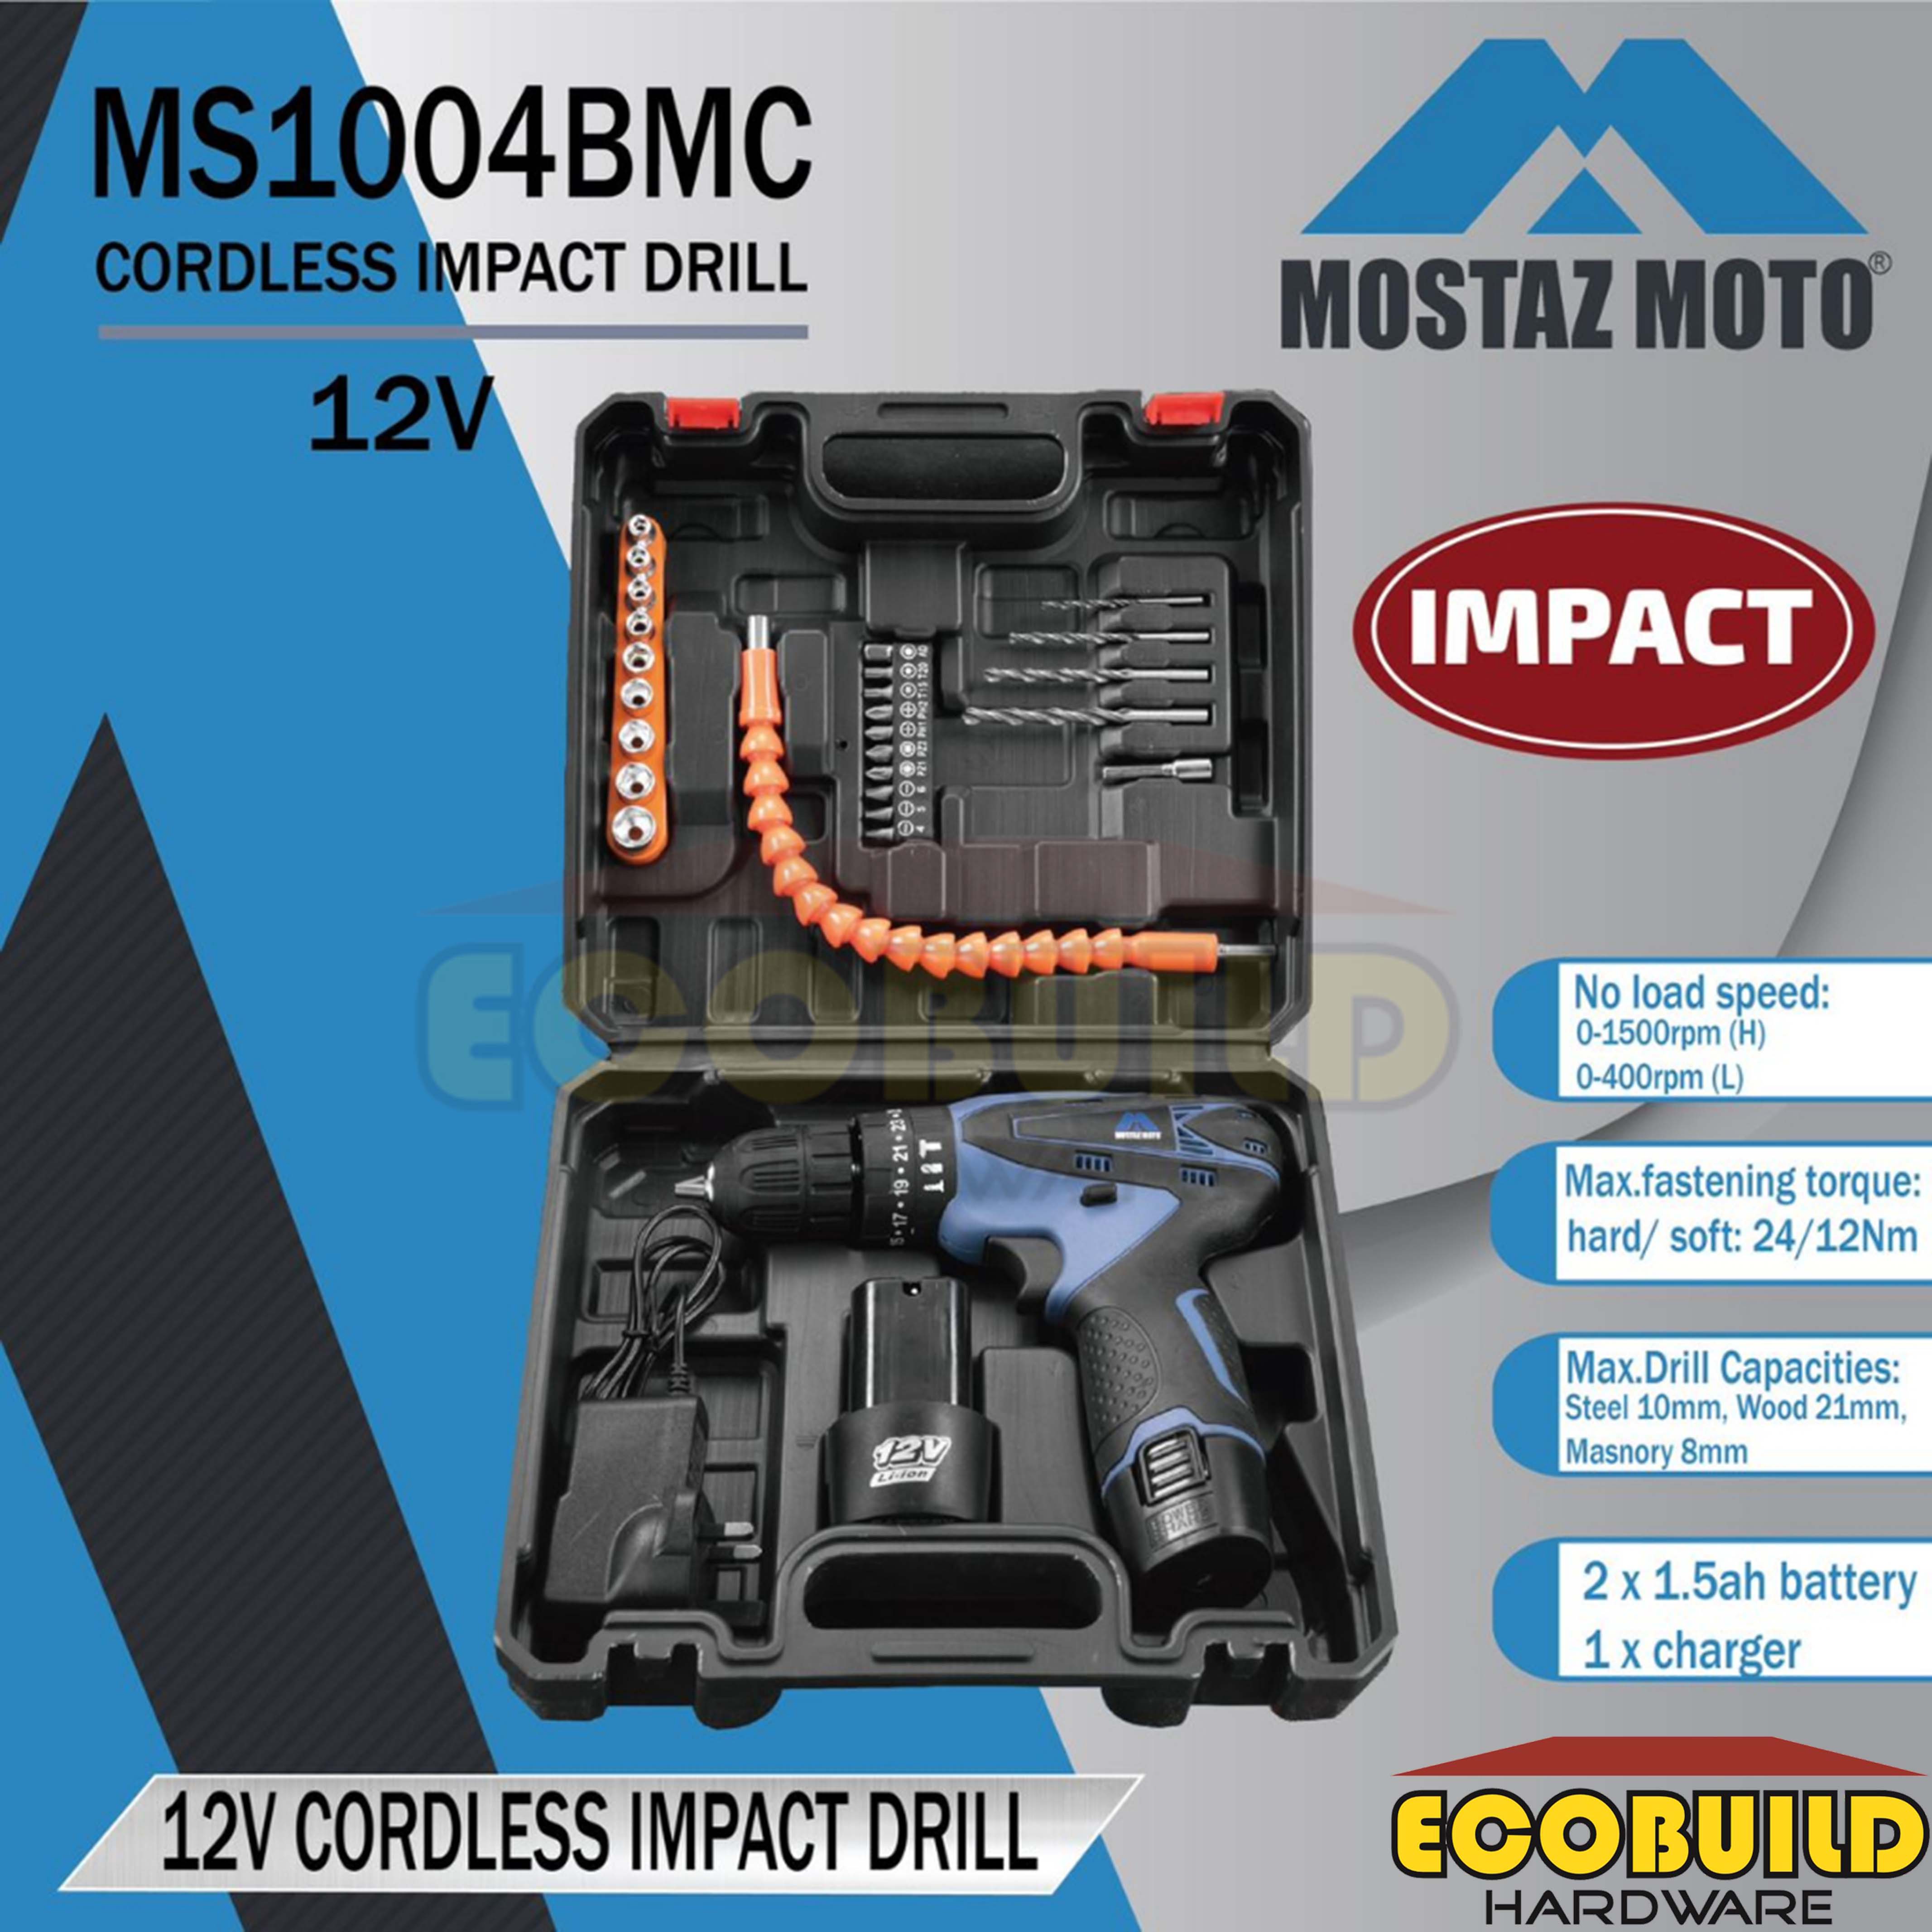 MOSTAZ MOTO CORDLESS IMPACT DRILL MS1004BMC